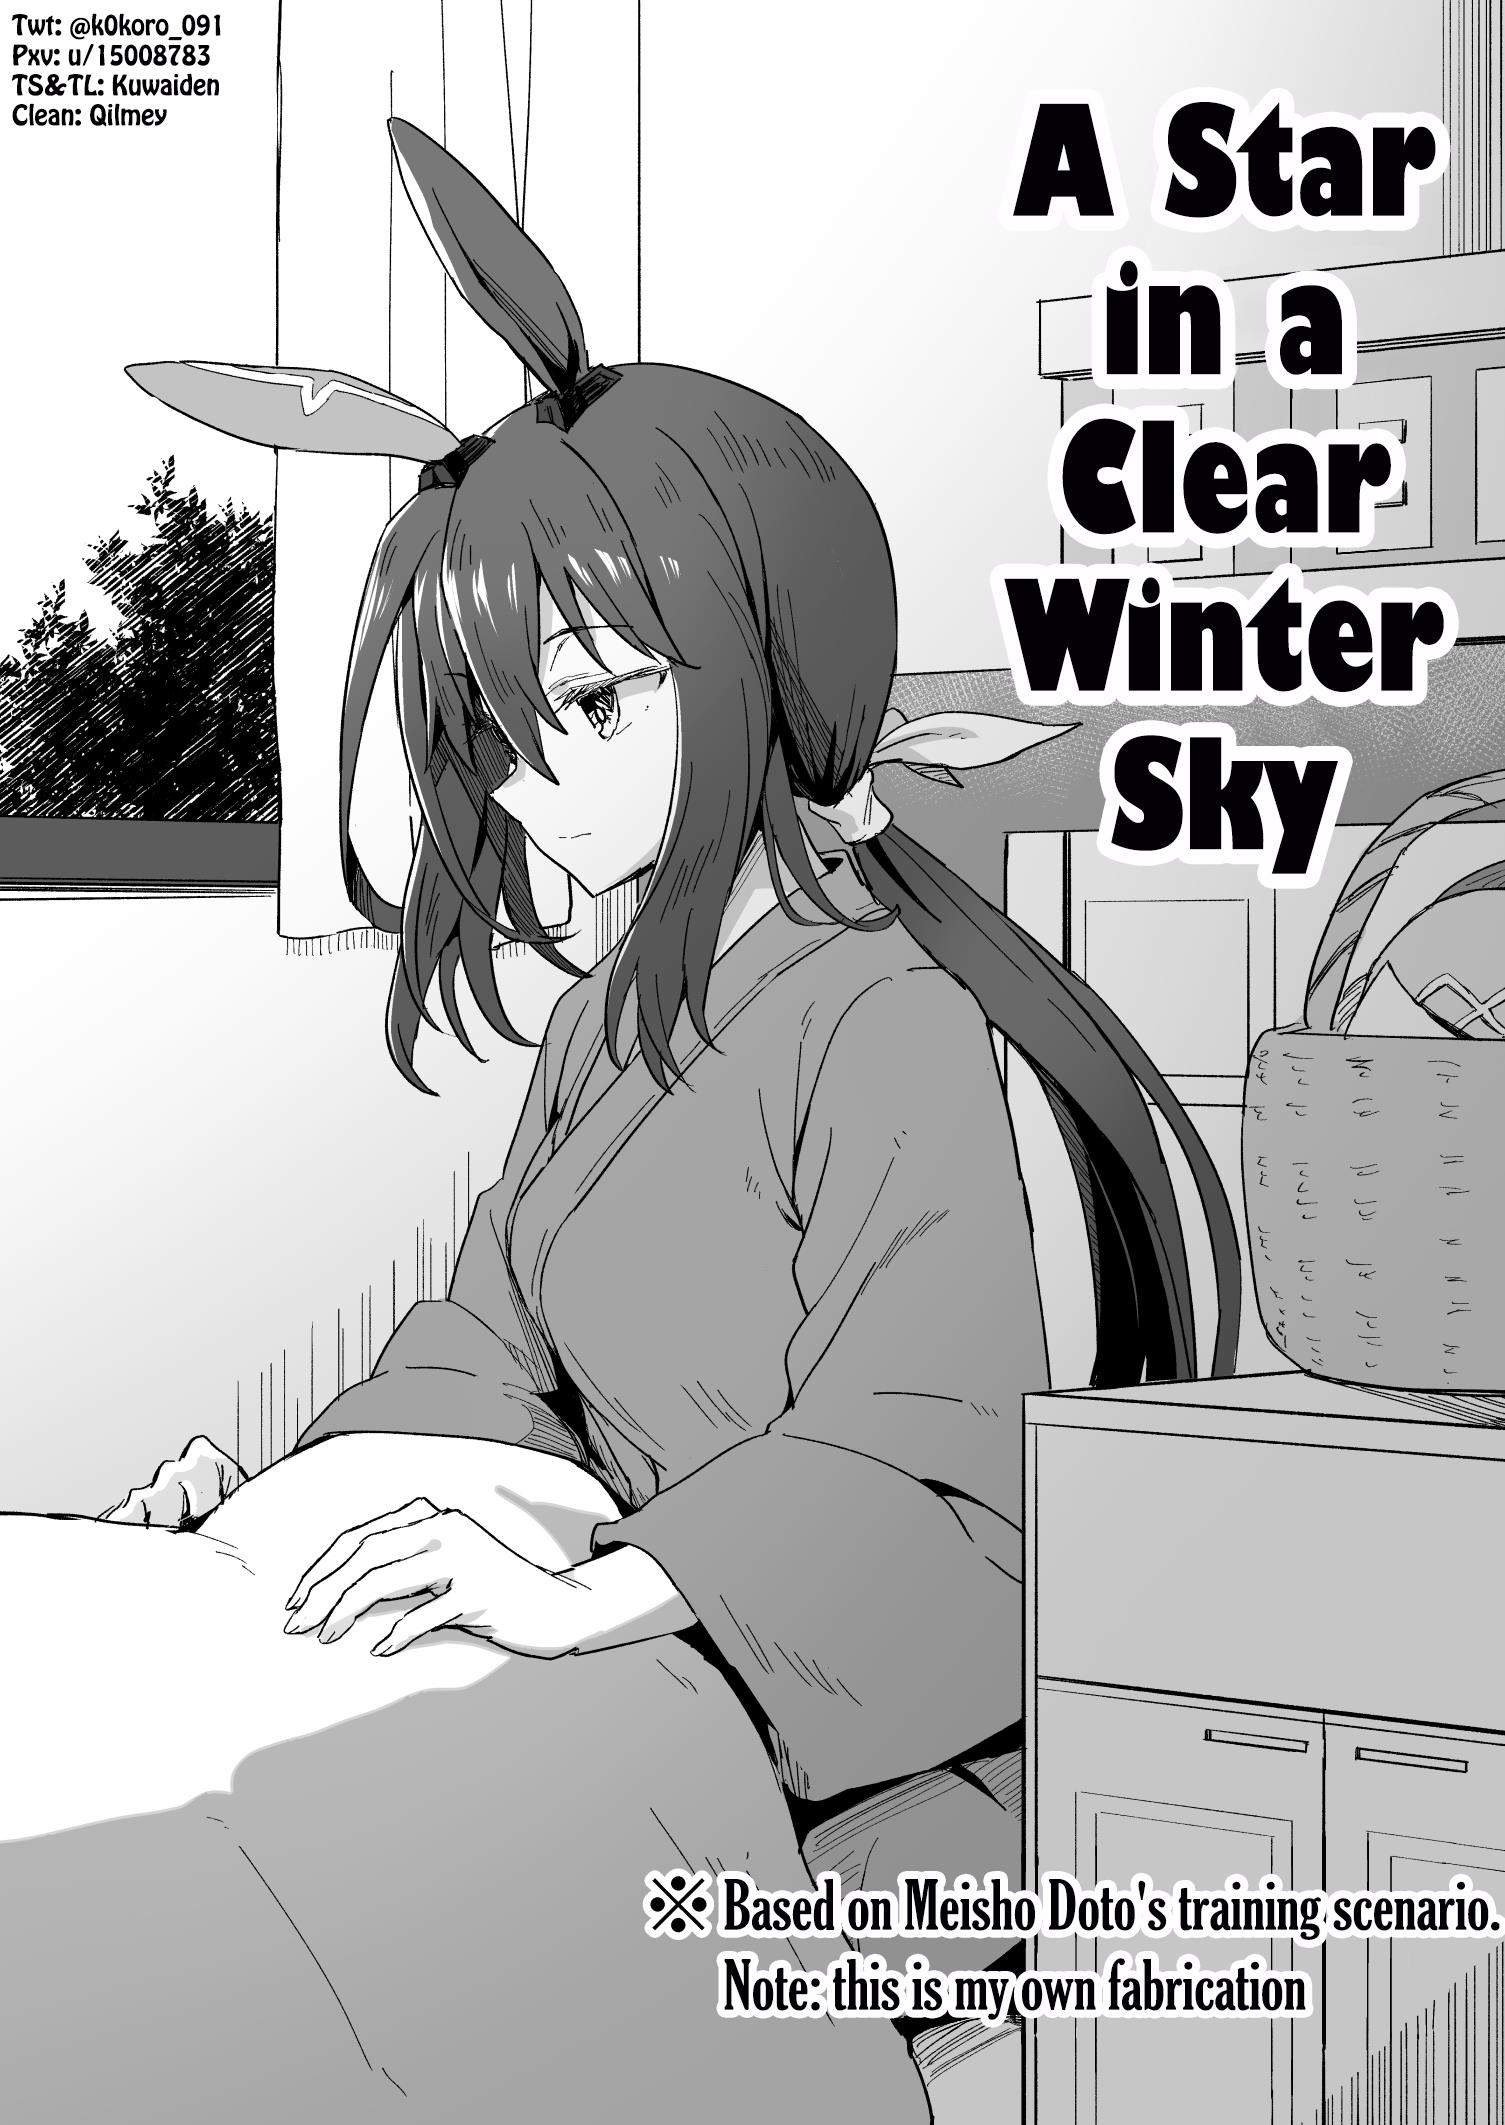 Kokoro-Sensei's Umamusume Shorts (Doujinshi) Chapter 13: A Star In A Clear Winter Sky - Picture 1